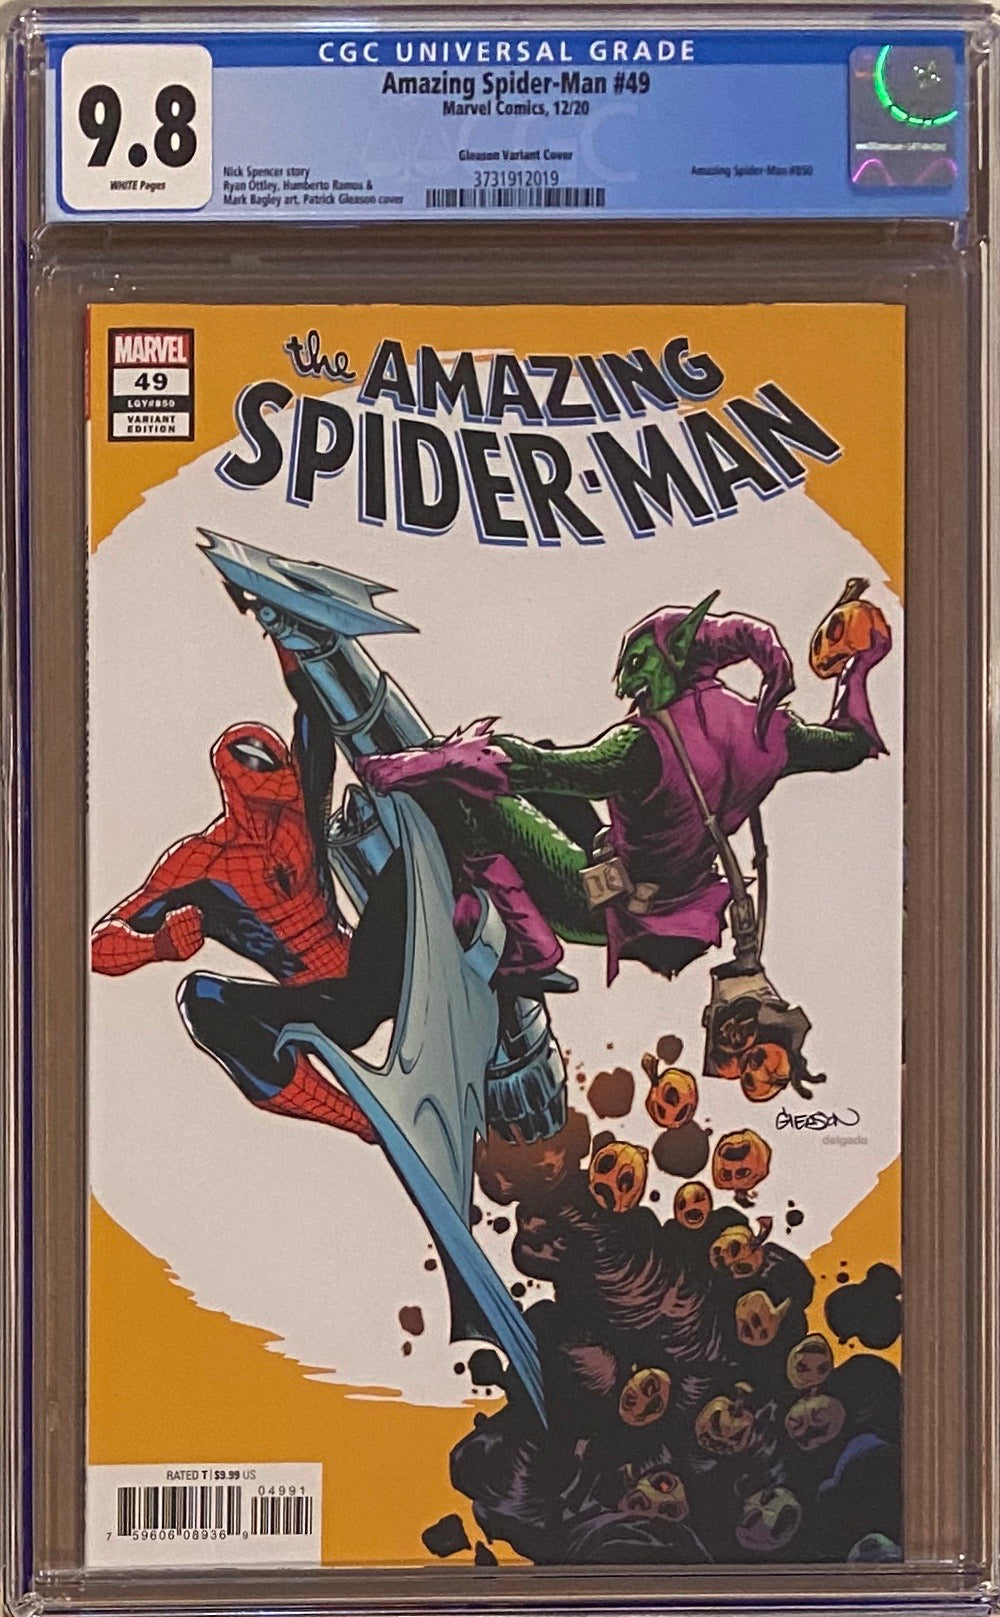 Amazing Spider-Man #850 (#49) Gleason Variant CGC 9.8